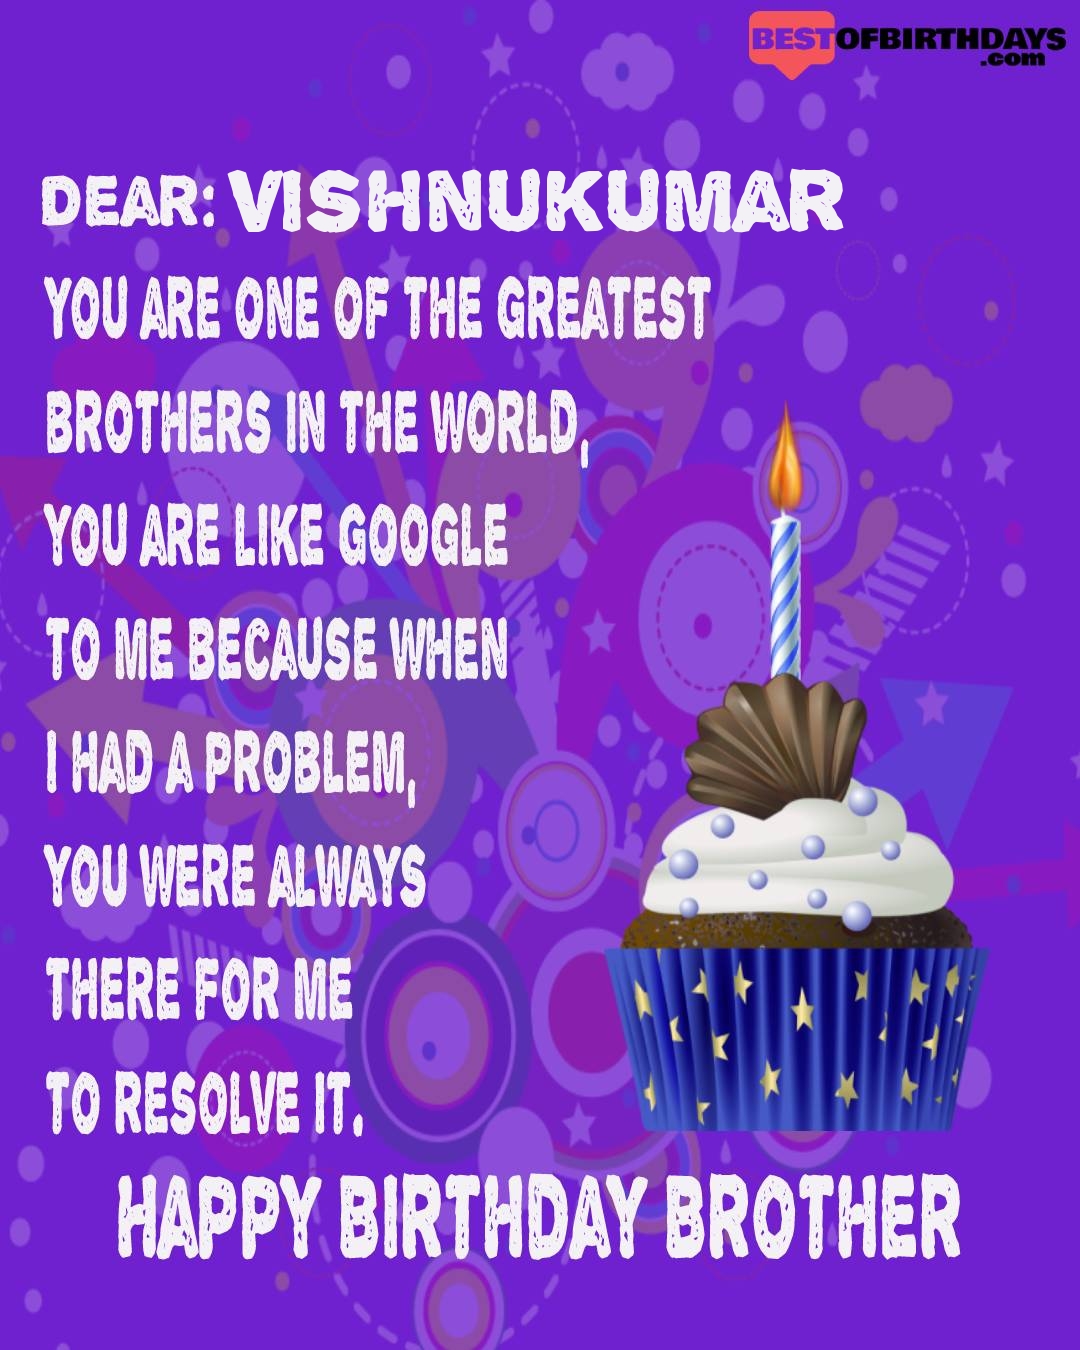 Happy birthday vishnukumar bhai brother bro